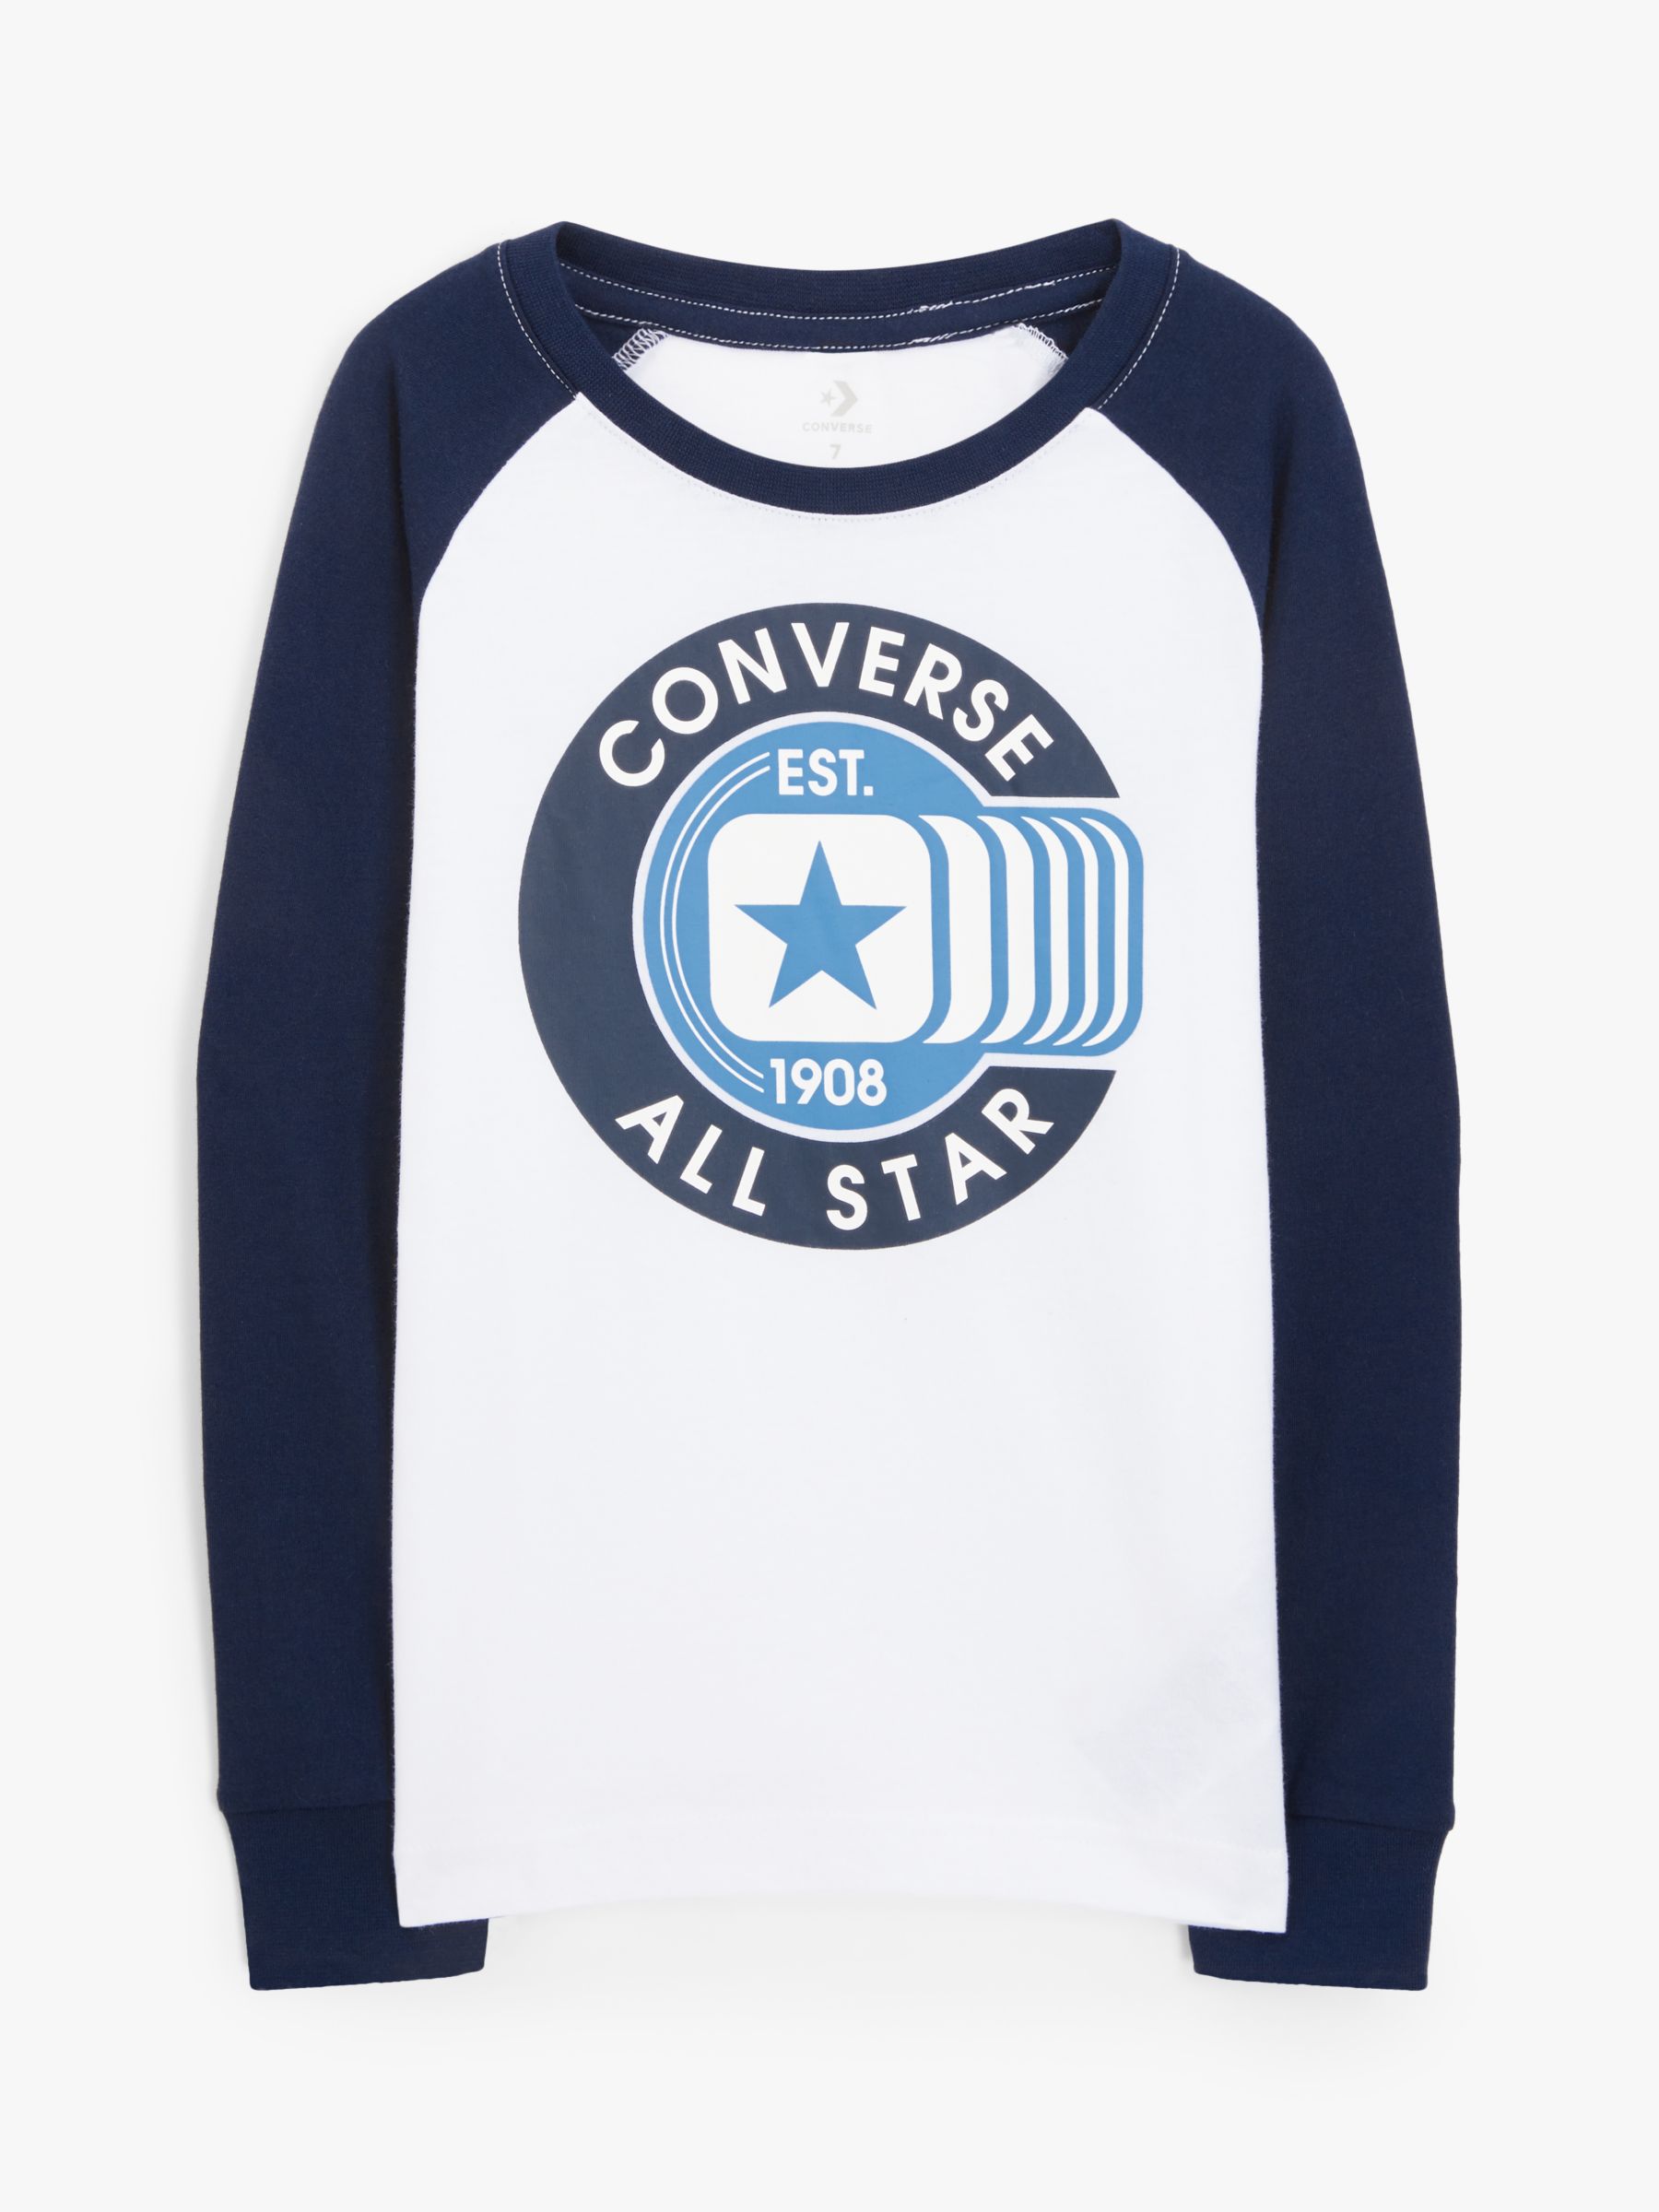 converse baby t shirt